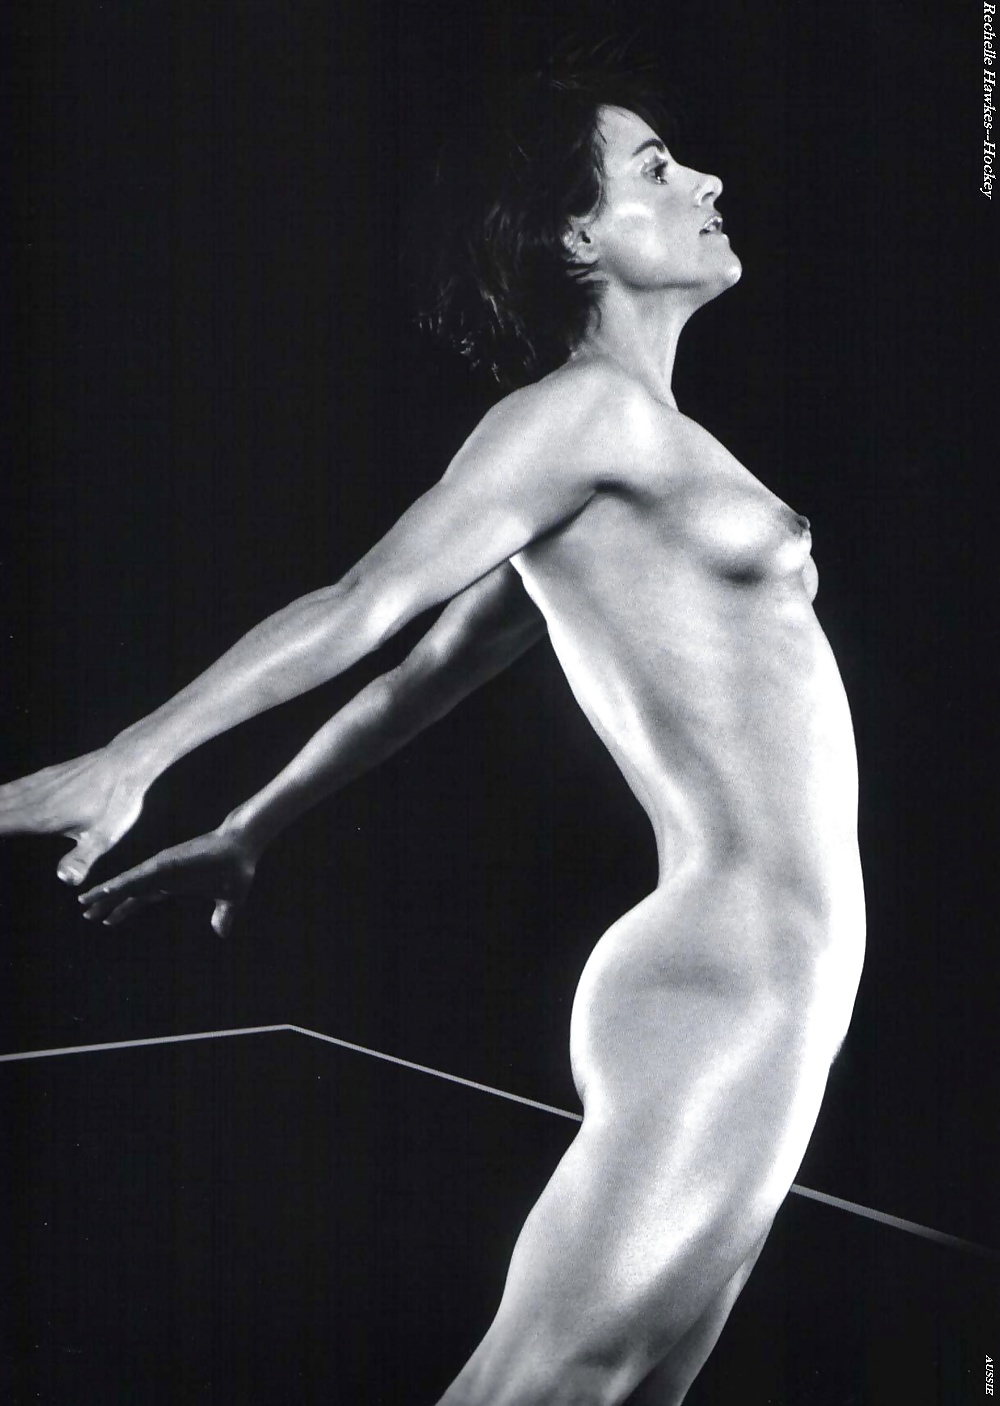 Australiane nude olimpioniche 2000
 #27683123